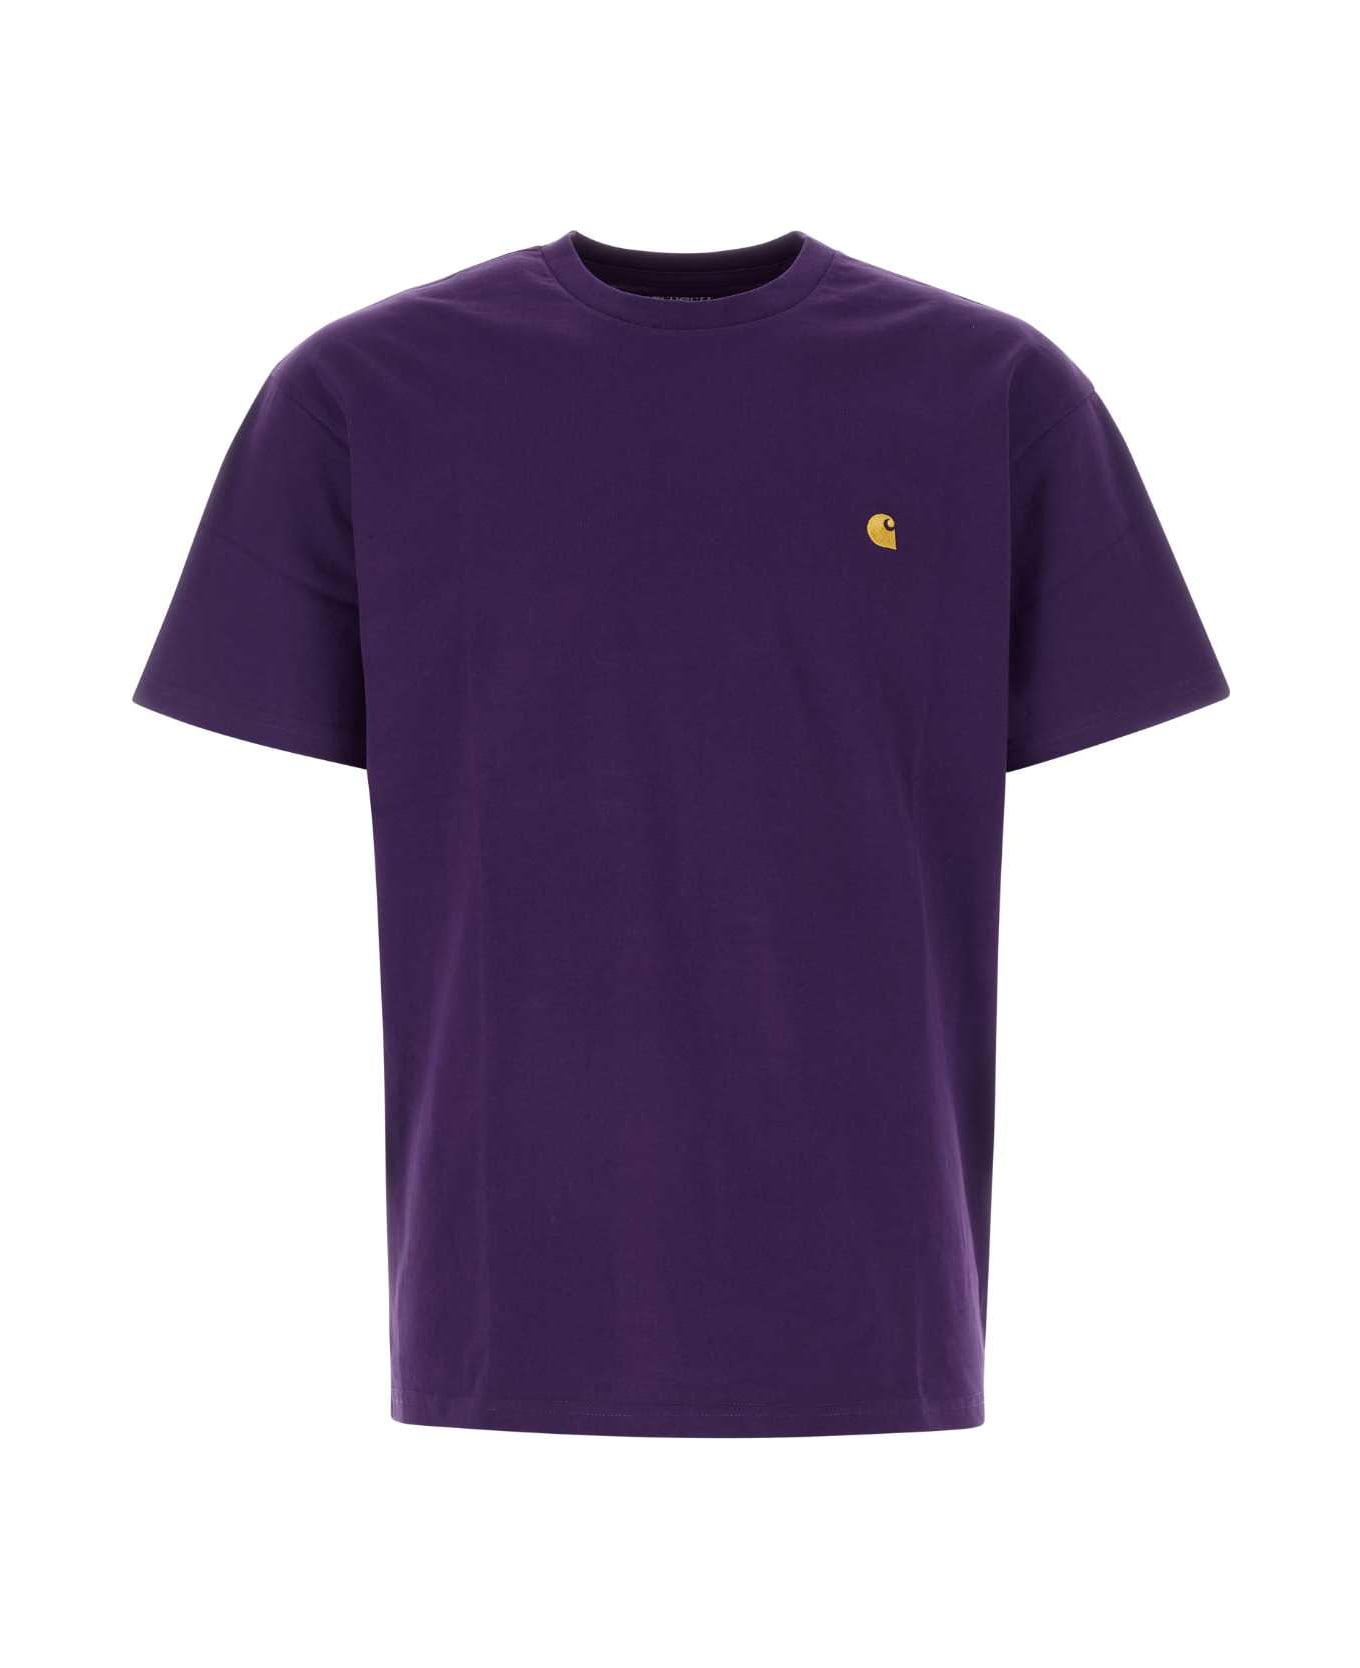 Carhartt Purple Cotton S/s Chasse T-shirt - GOLD